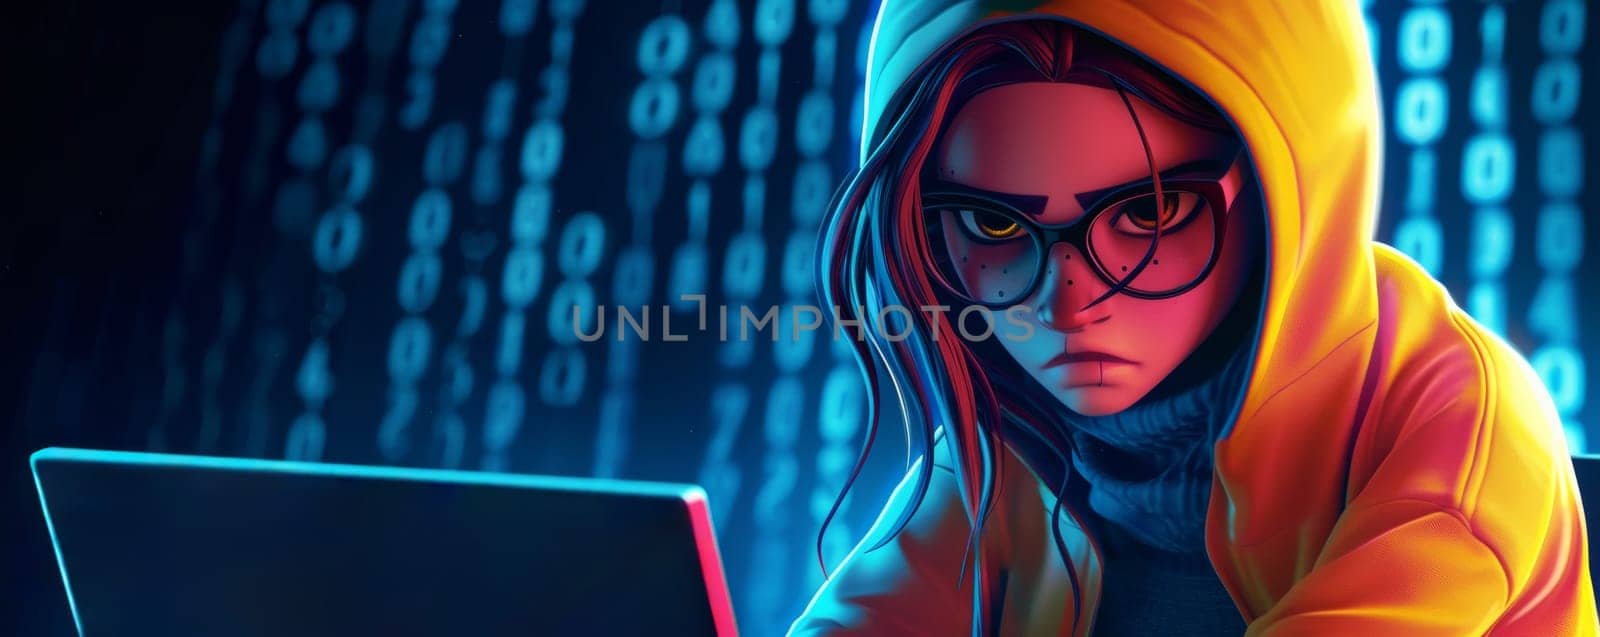 Cartoon Hacker Woman in Yellow Hoodie Sitting in Front of Laptop.